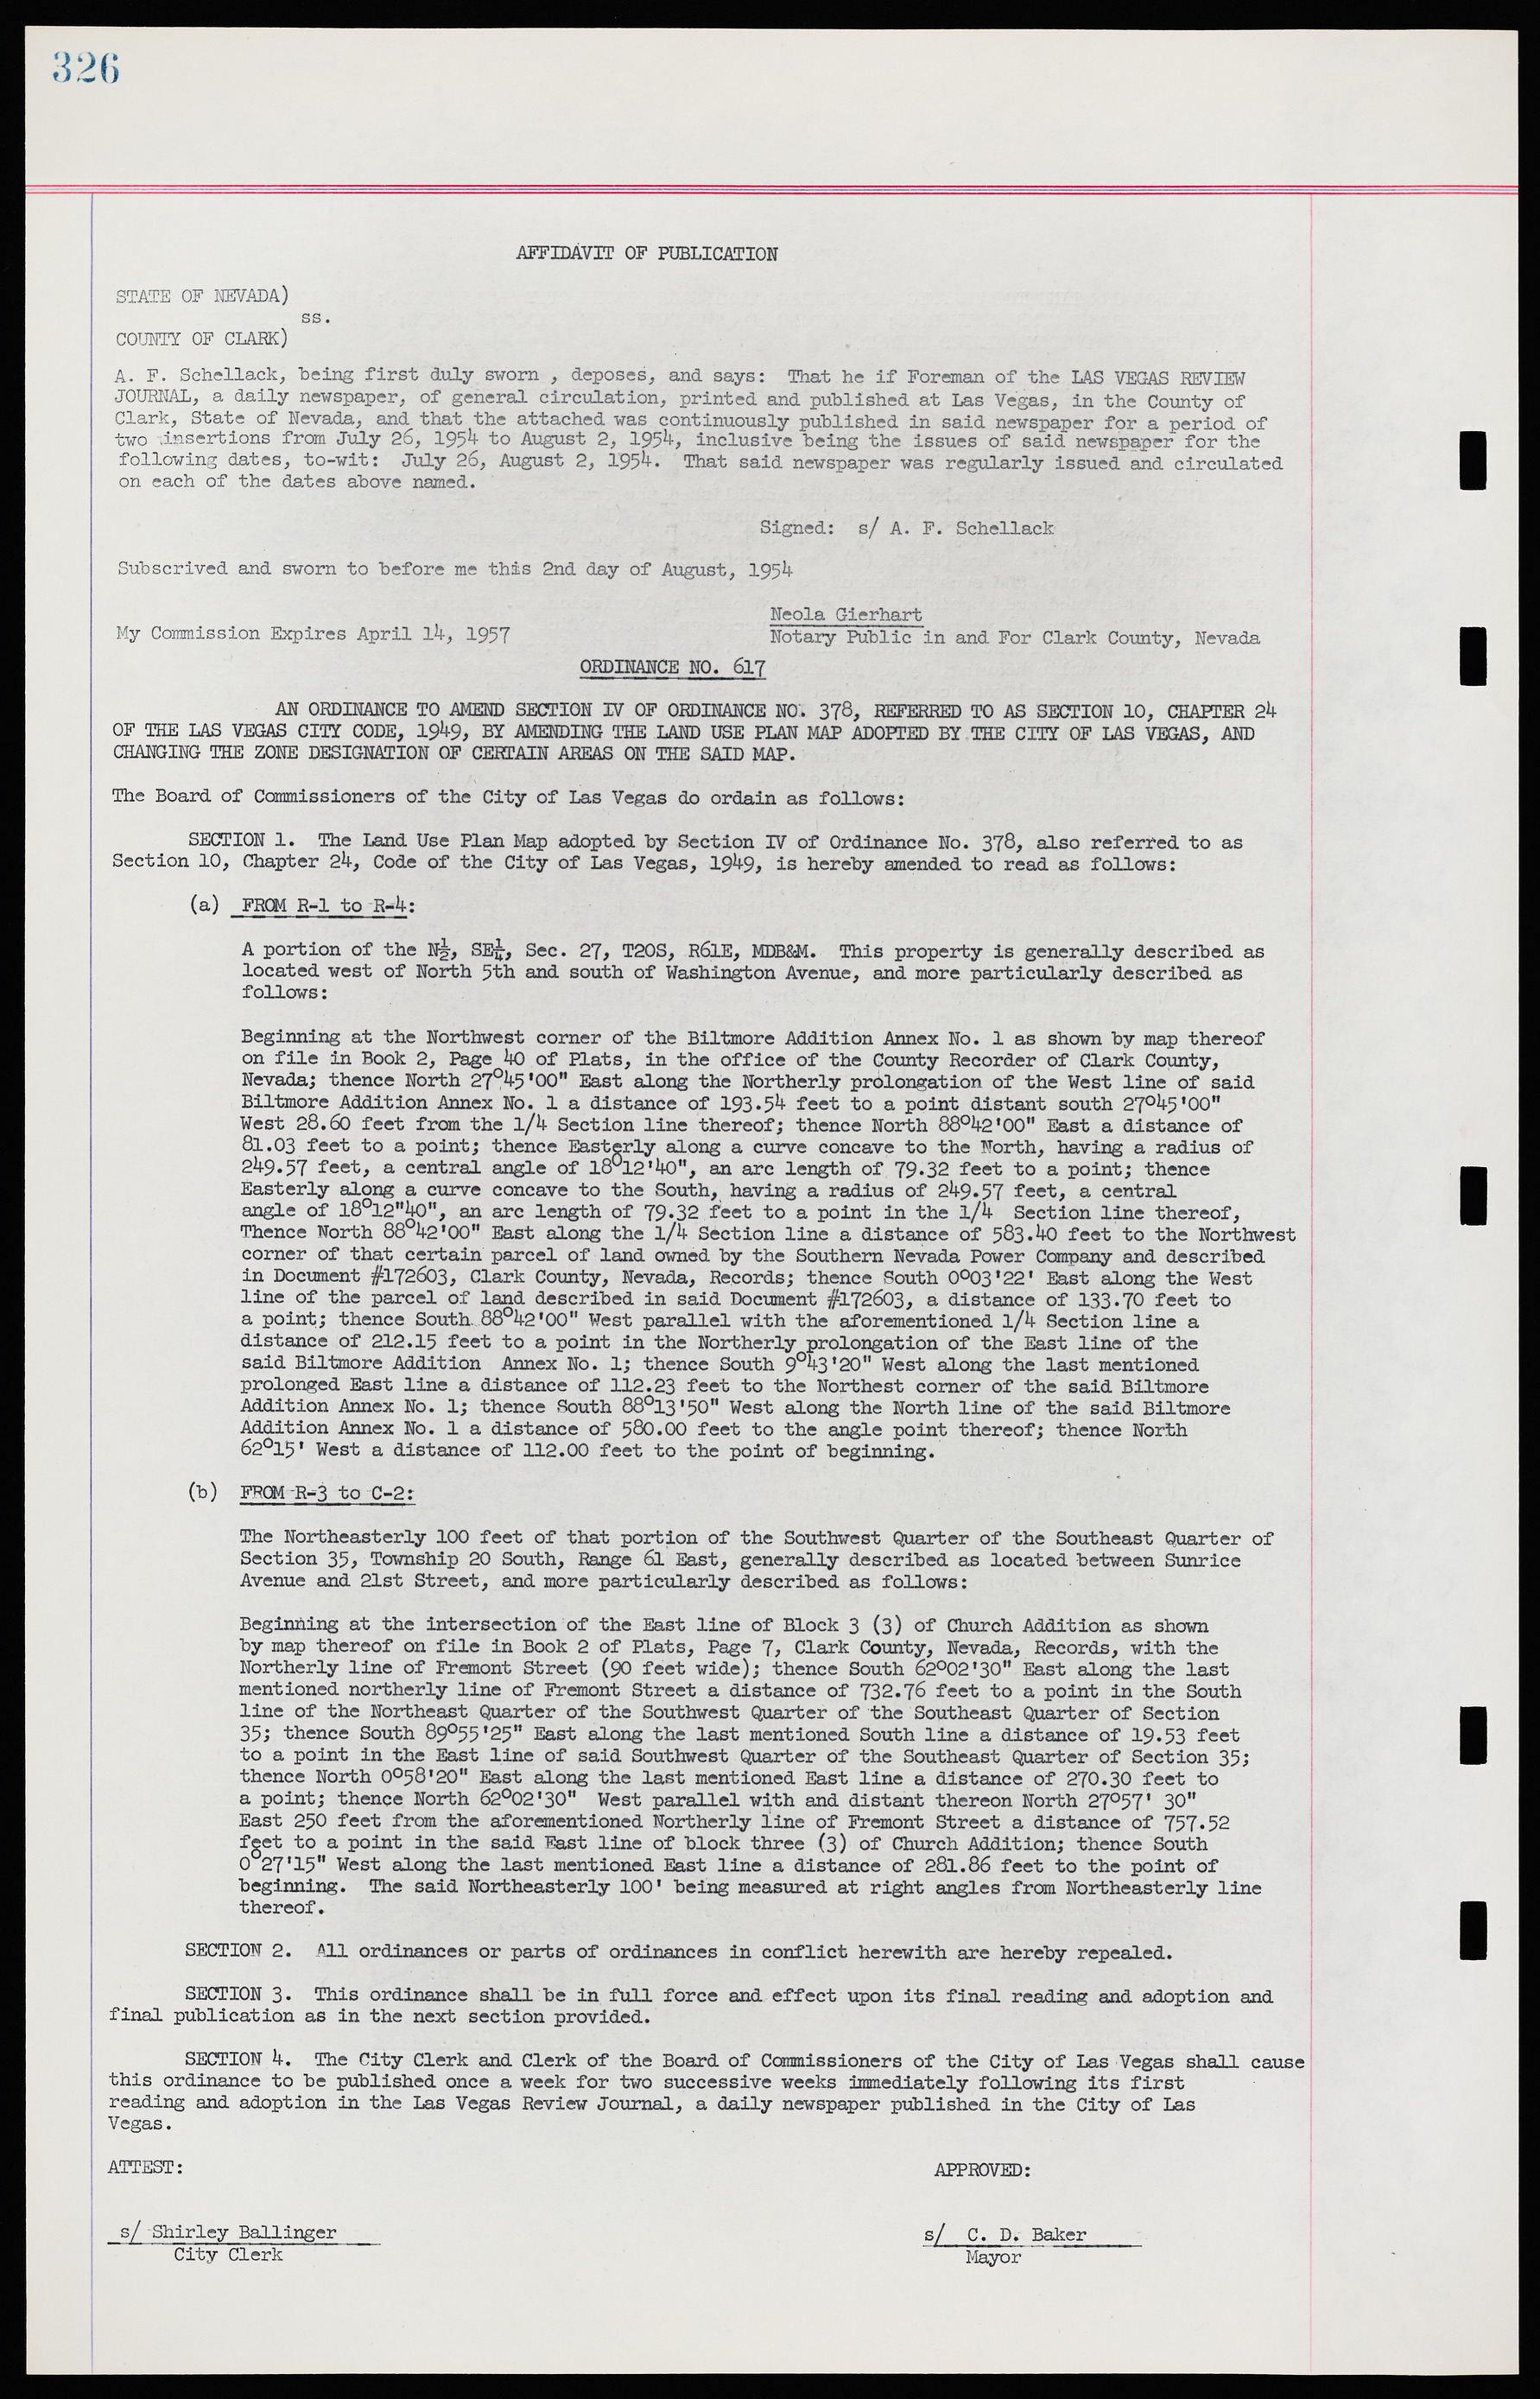 Las Vegas City Ordinances, November 13, 1950 to August 6, 1958, lvc000015-334